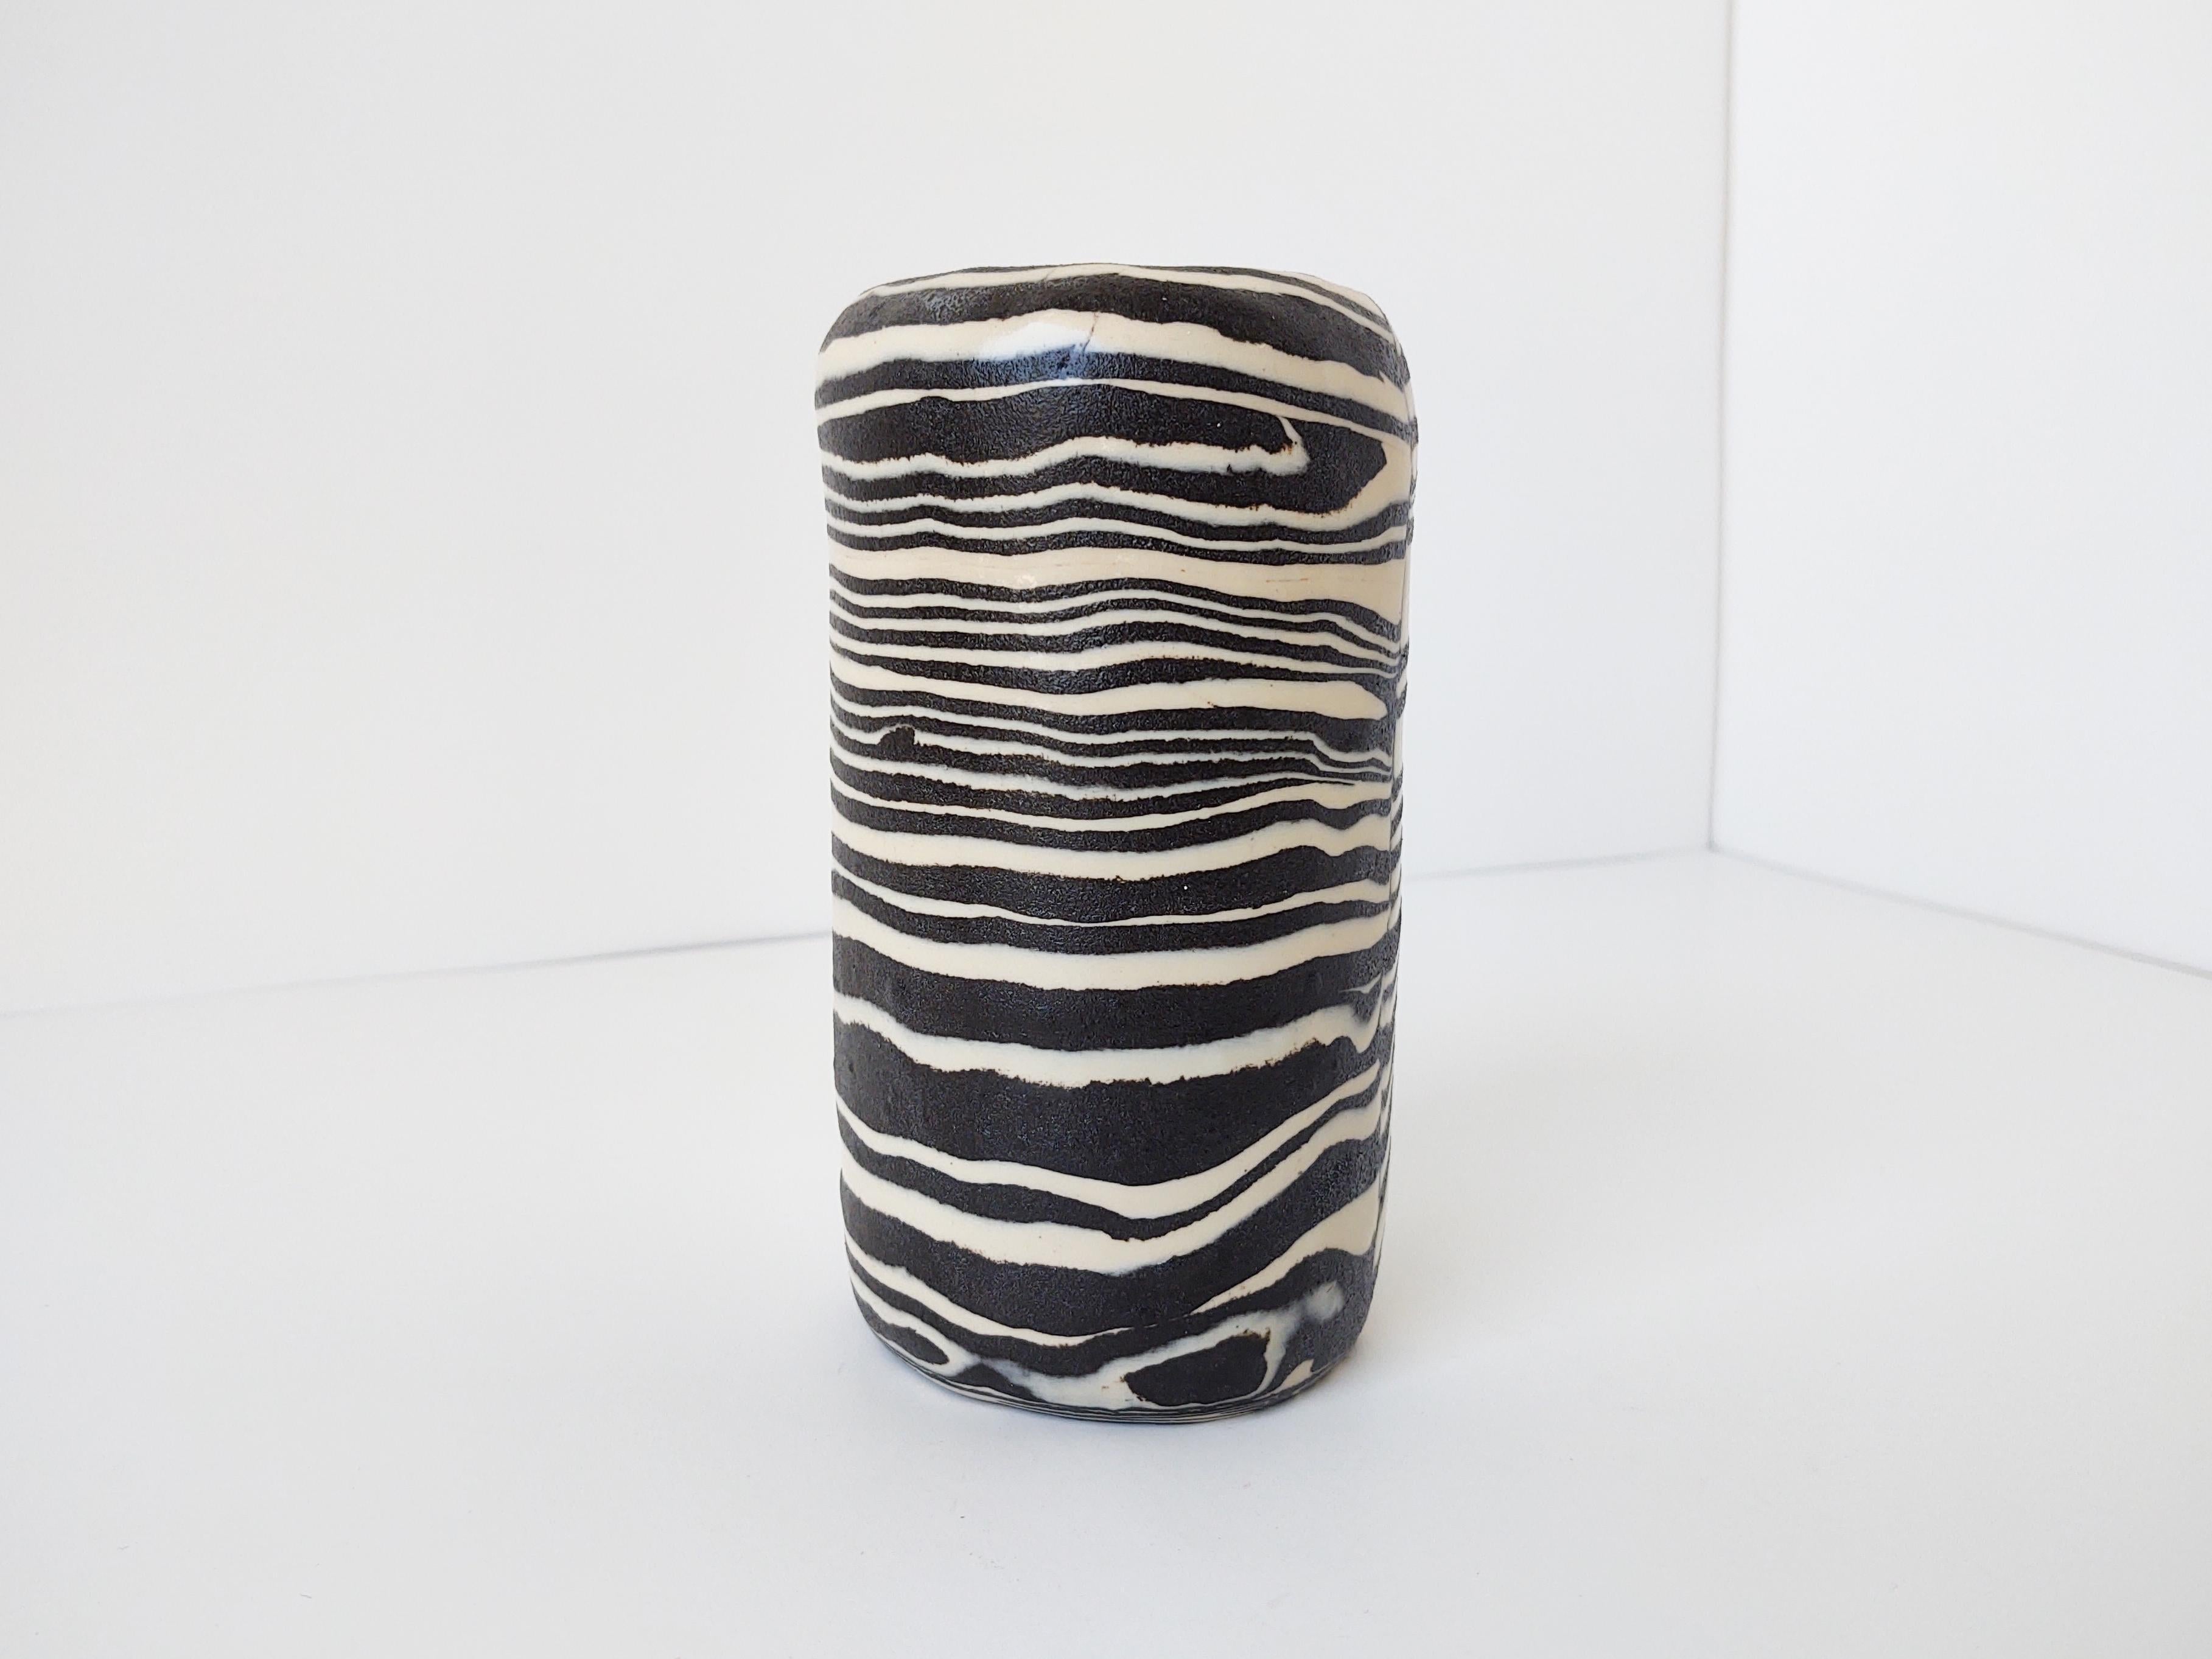 Organic Modern Handmade Ceramic Nerikomi 'Zebra' Striped Black and White Vase by Fizzy Ceramics For Sale